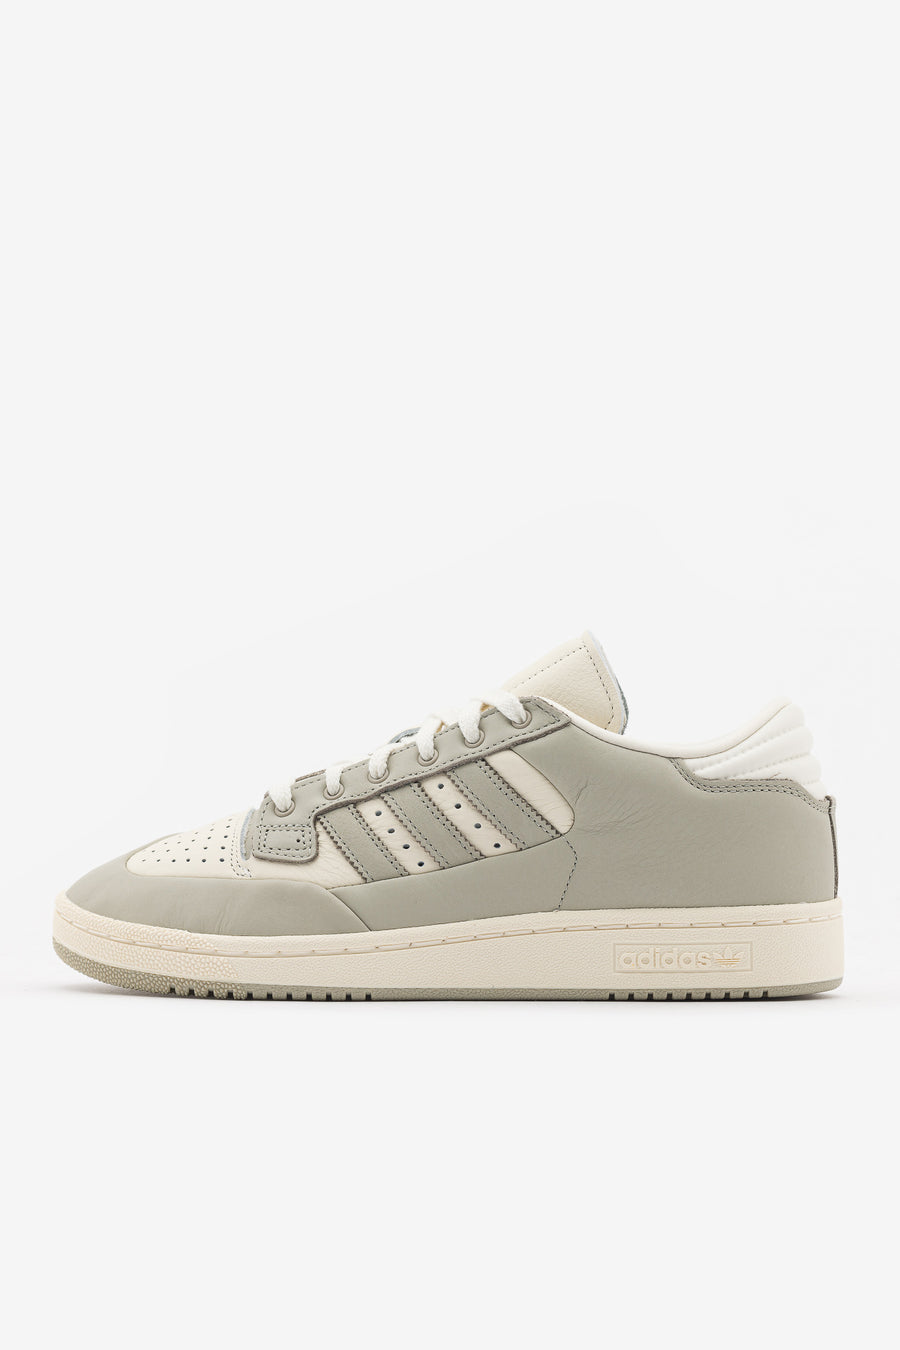 adidas Men\'s 85 Sesame/Cream White/Cloud in Cetennial White Lo Sneaker 001 -